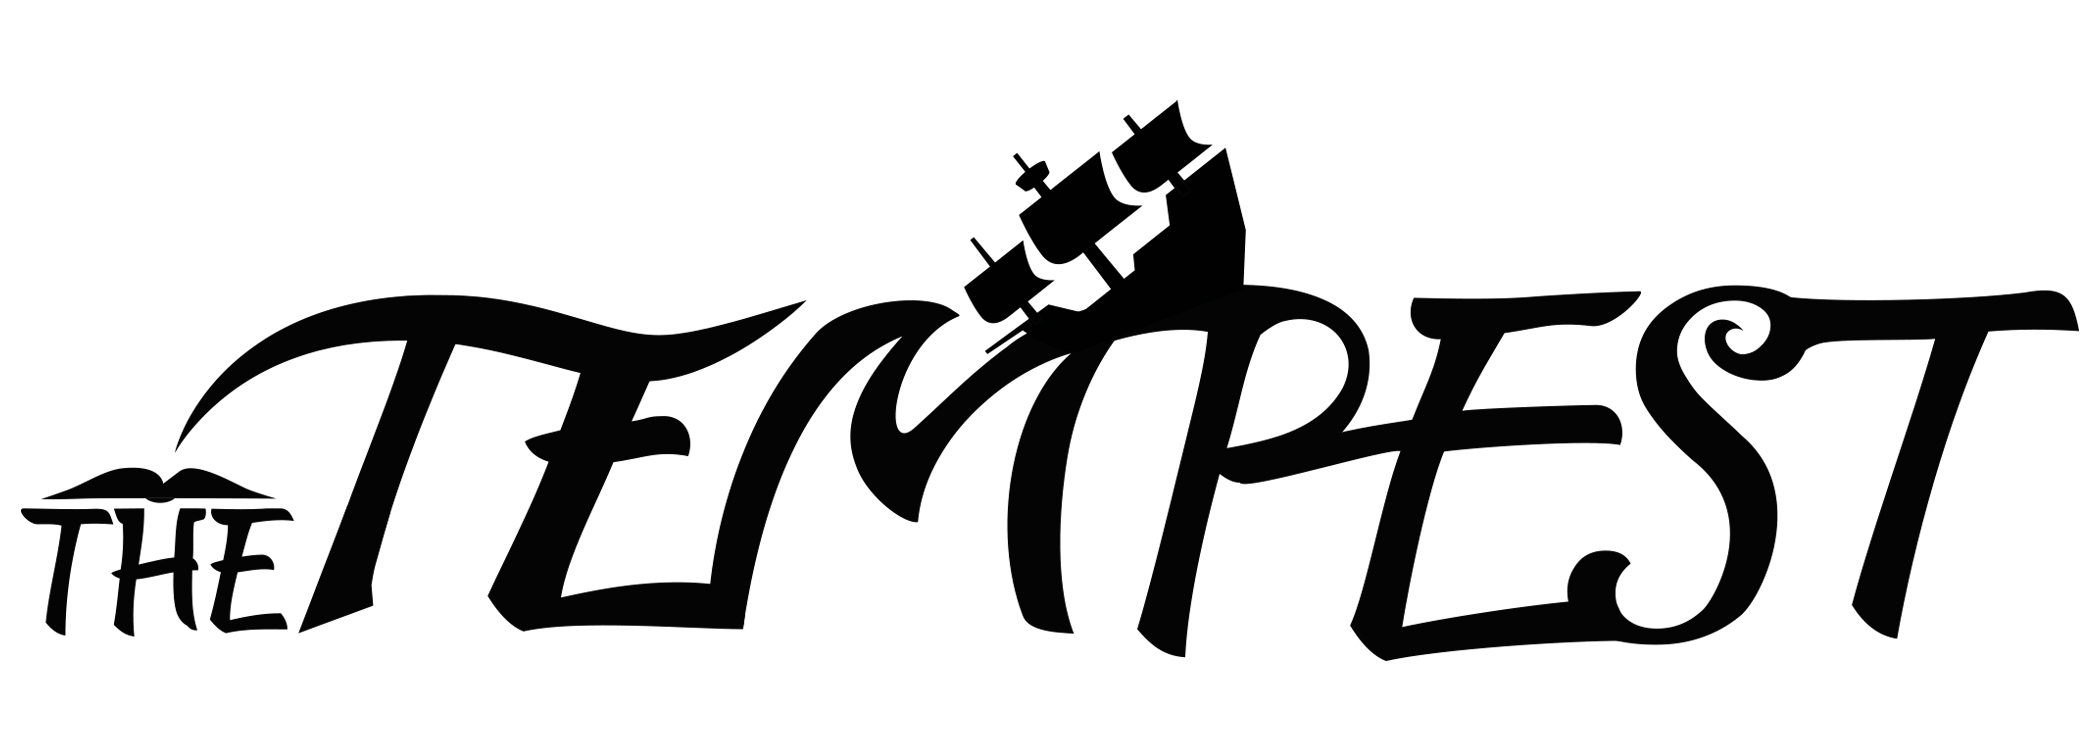 the tempest logo